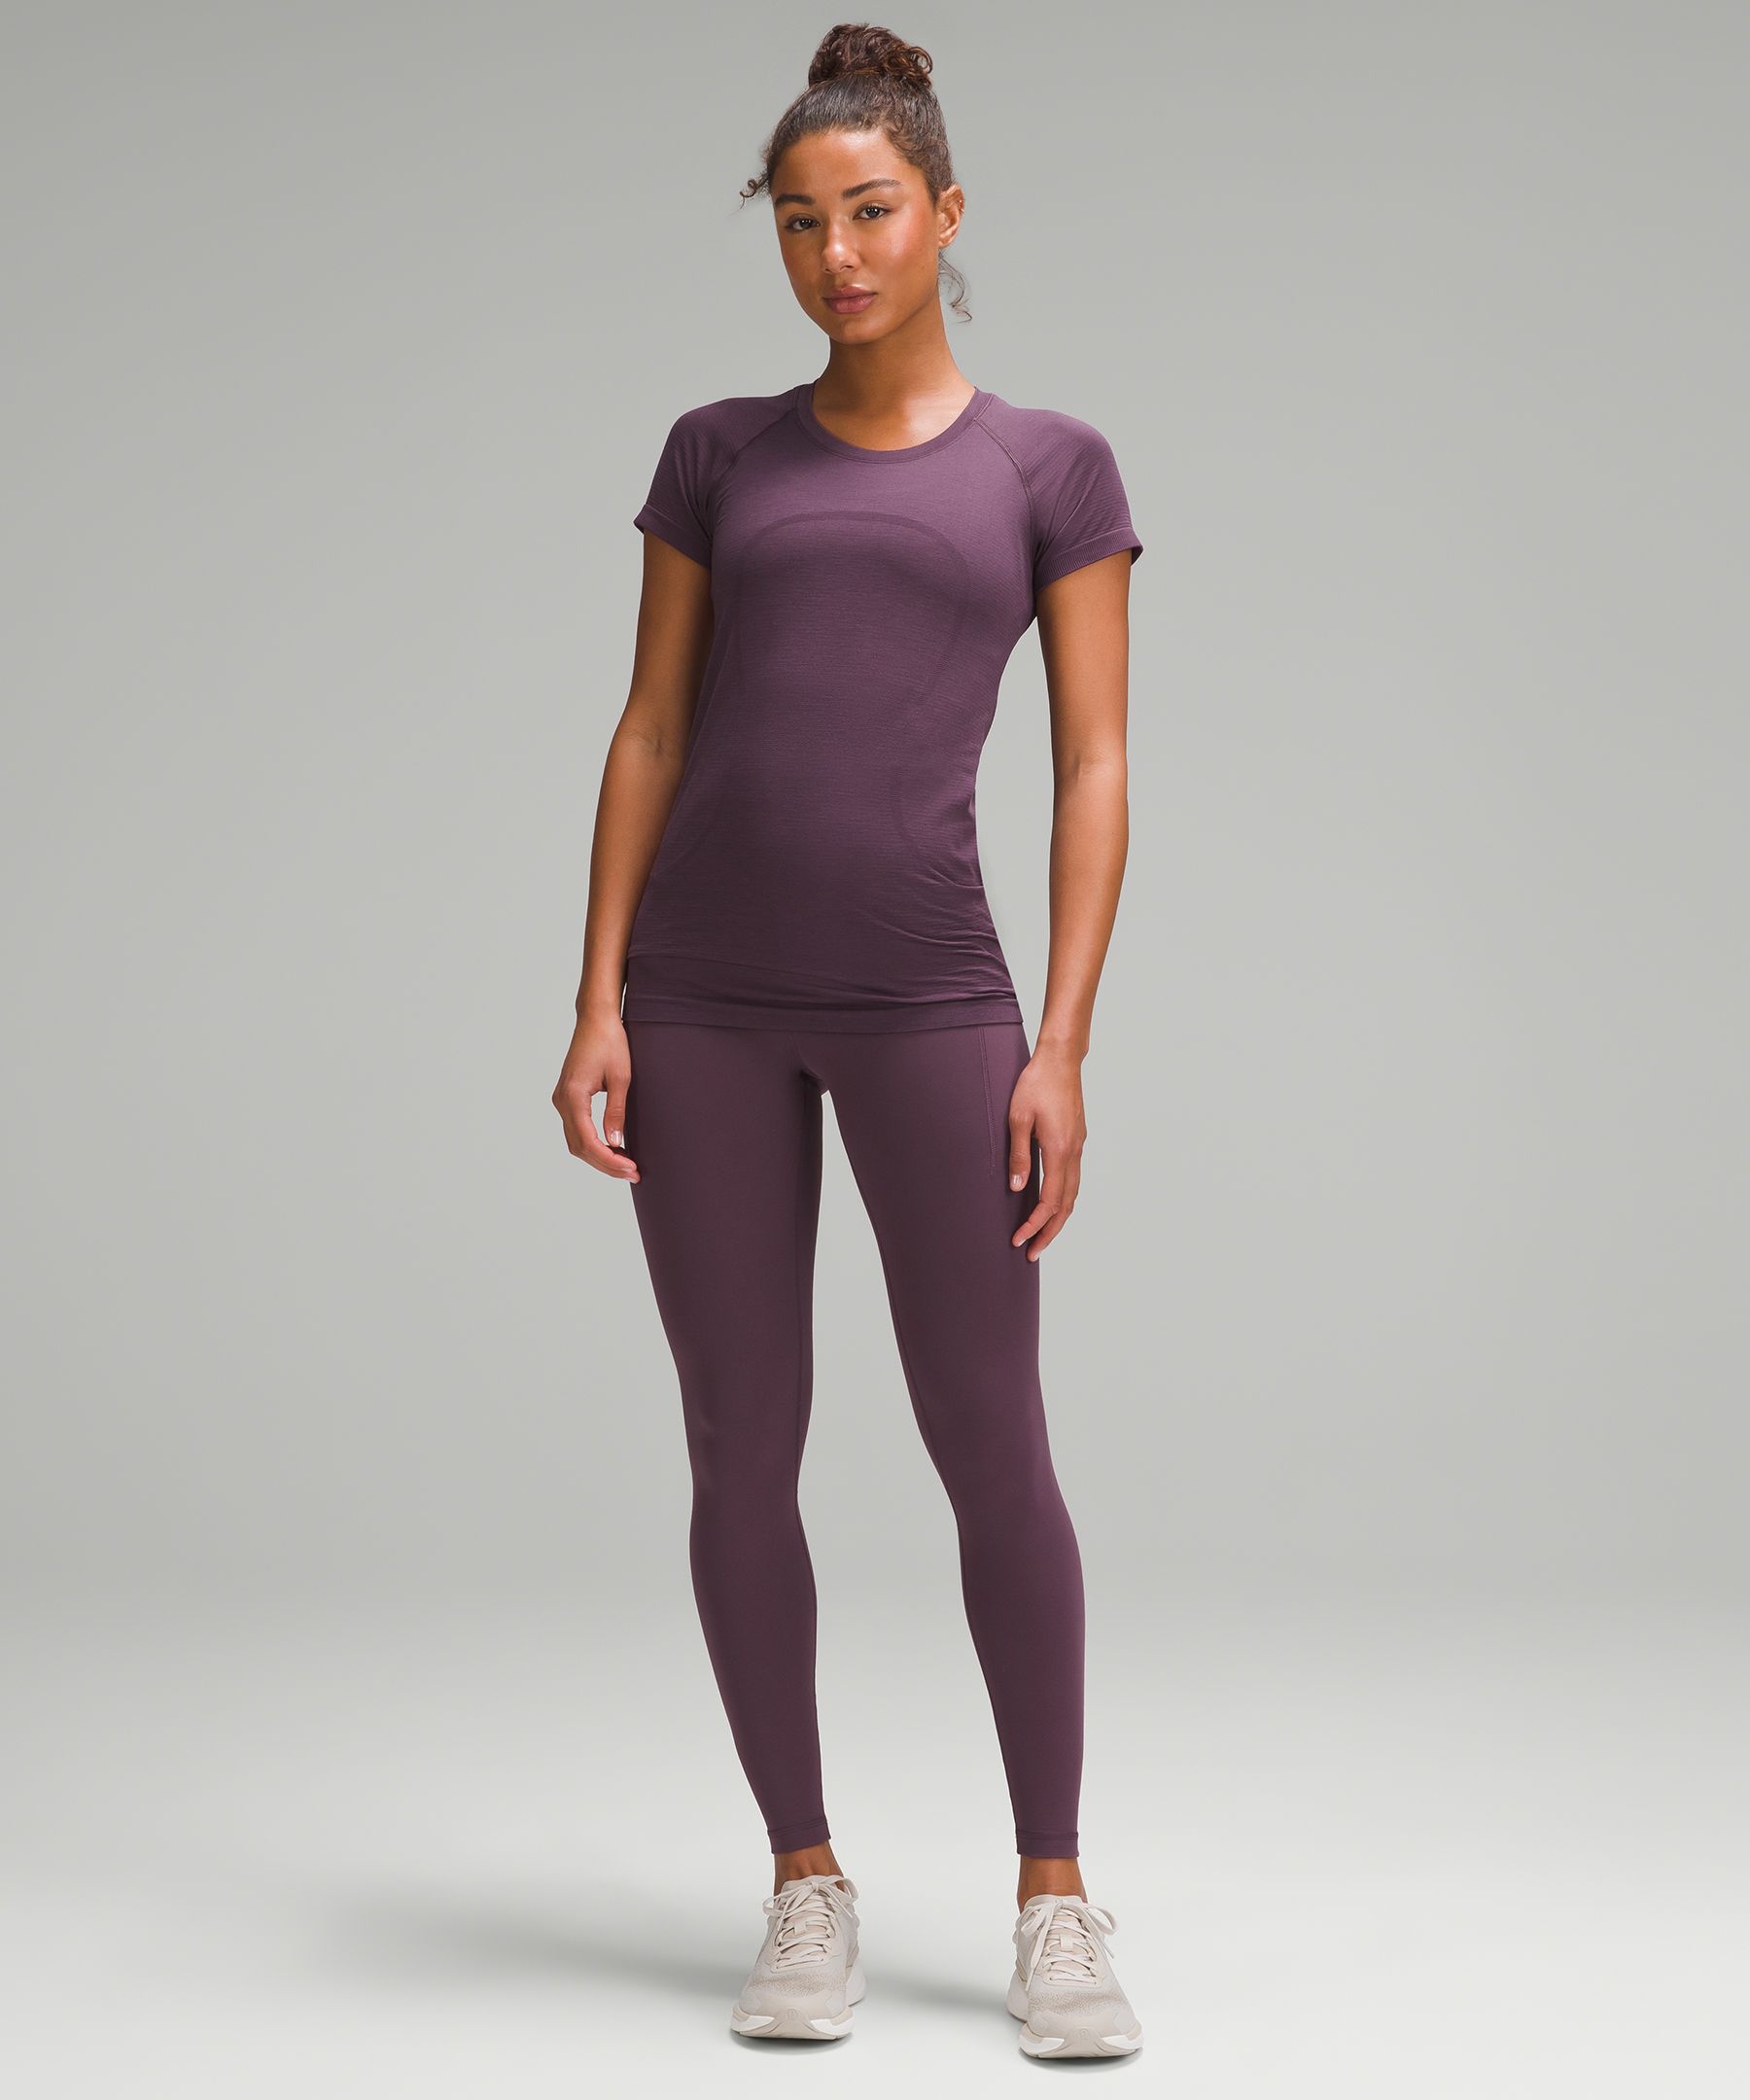 Fashion New Arrivals Popular Girl's Underwear Seamless Yoga Pants Running  Set-Violet @ Best Price Online